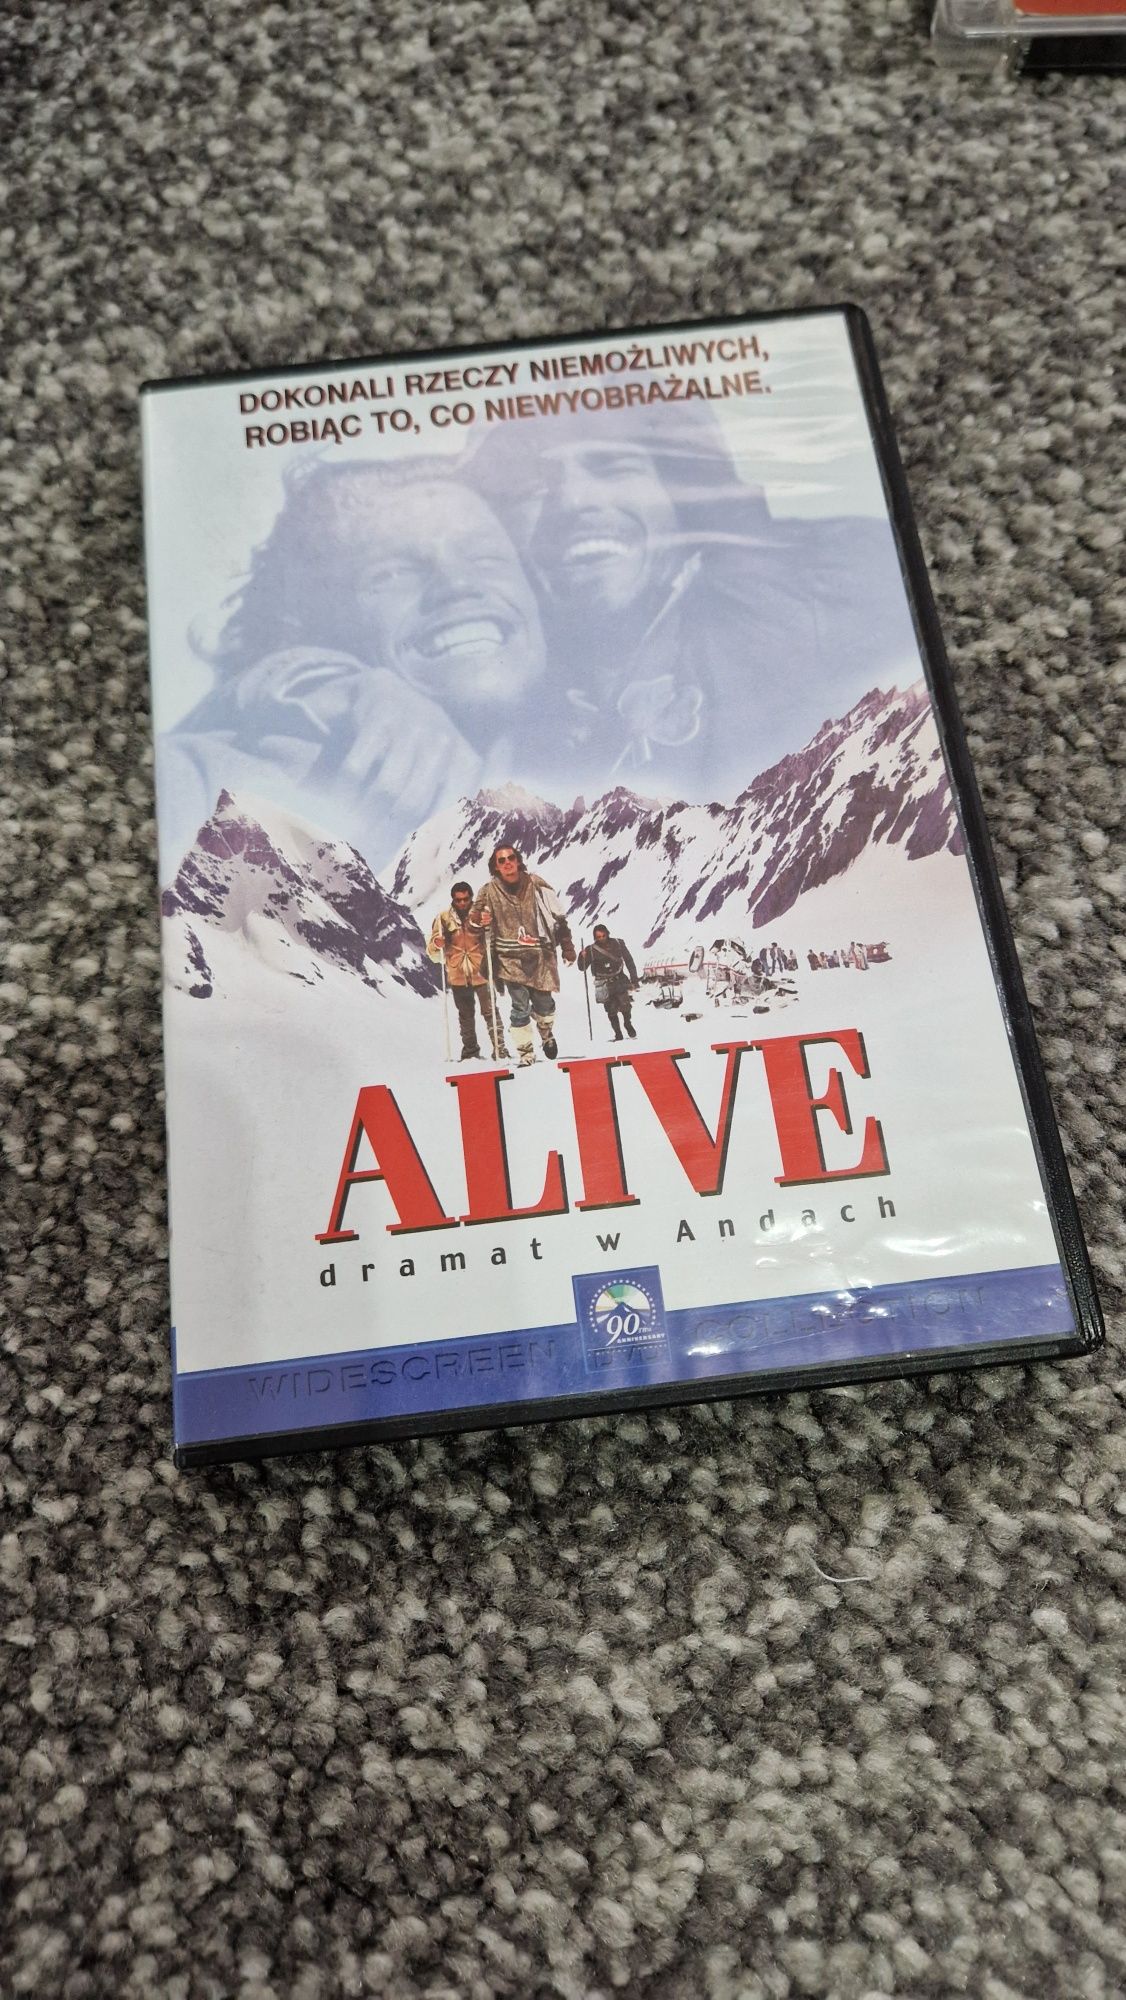 Film DVD Alive dramat w Andach